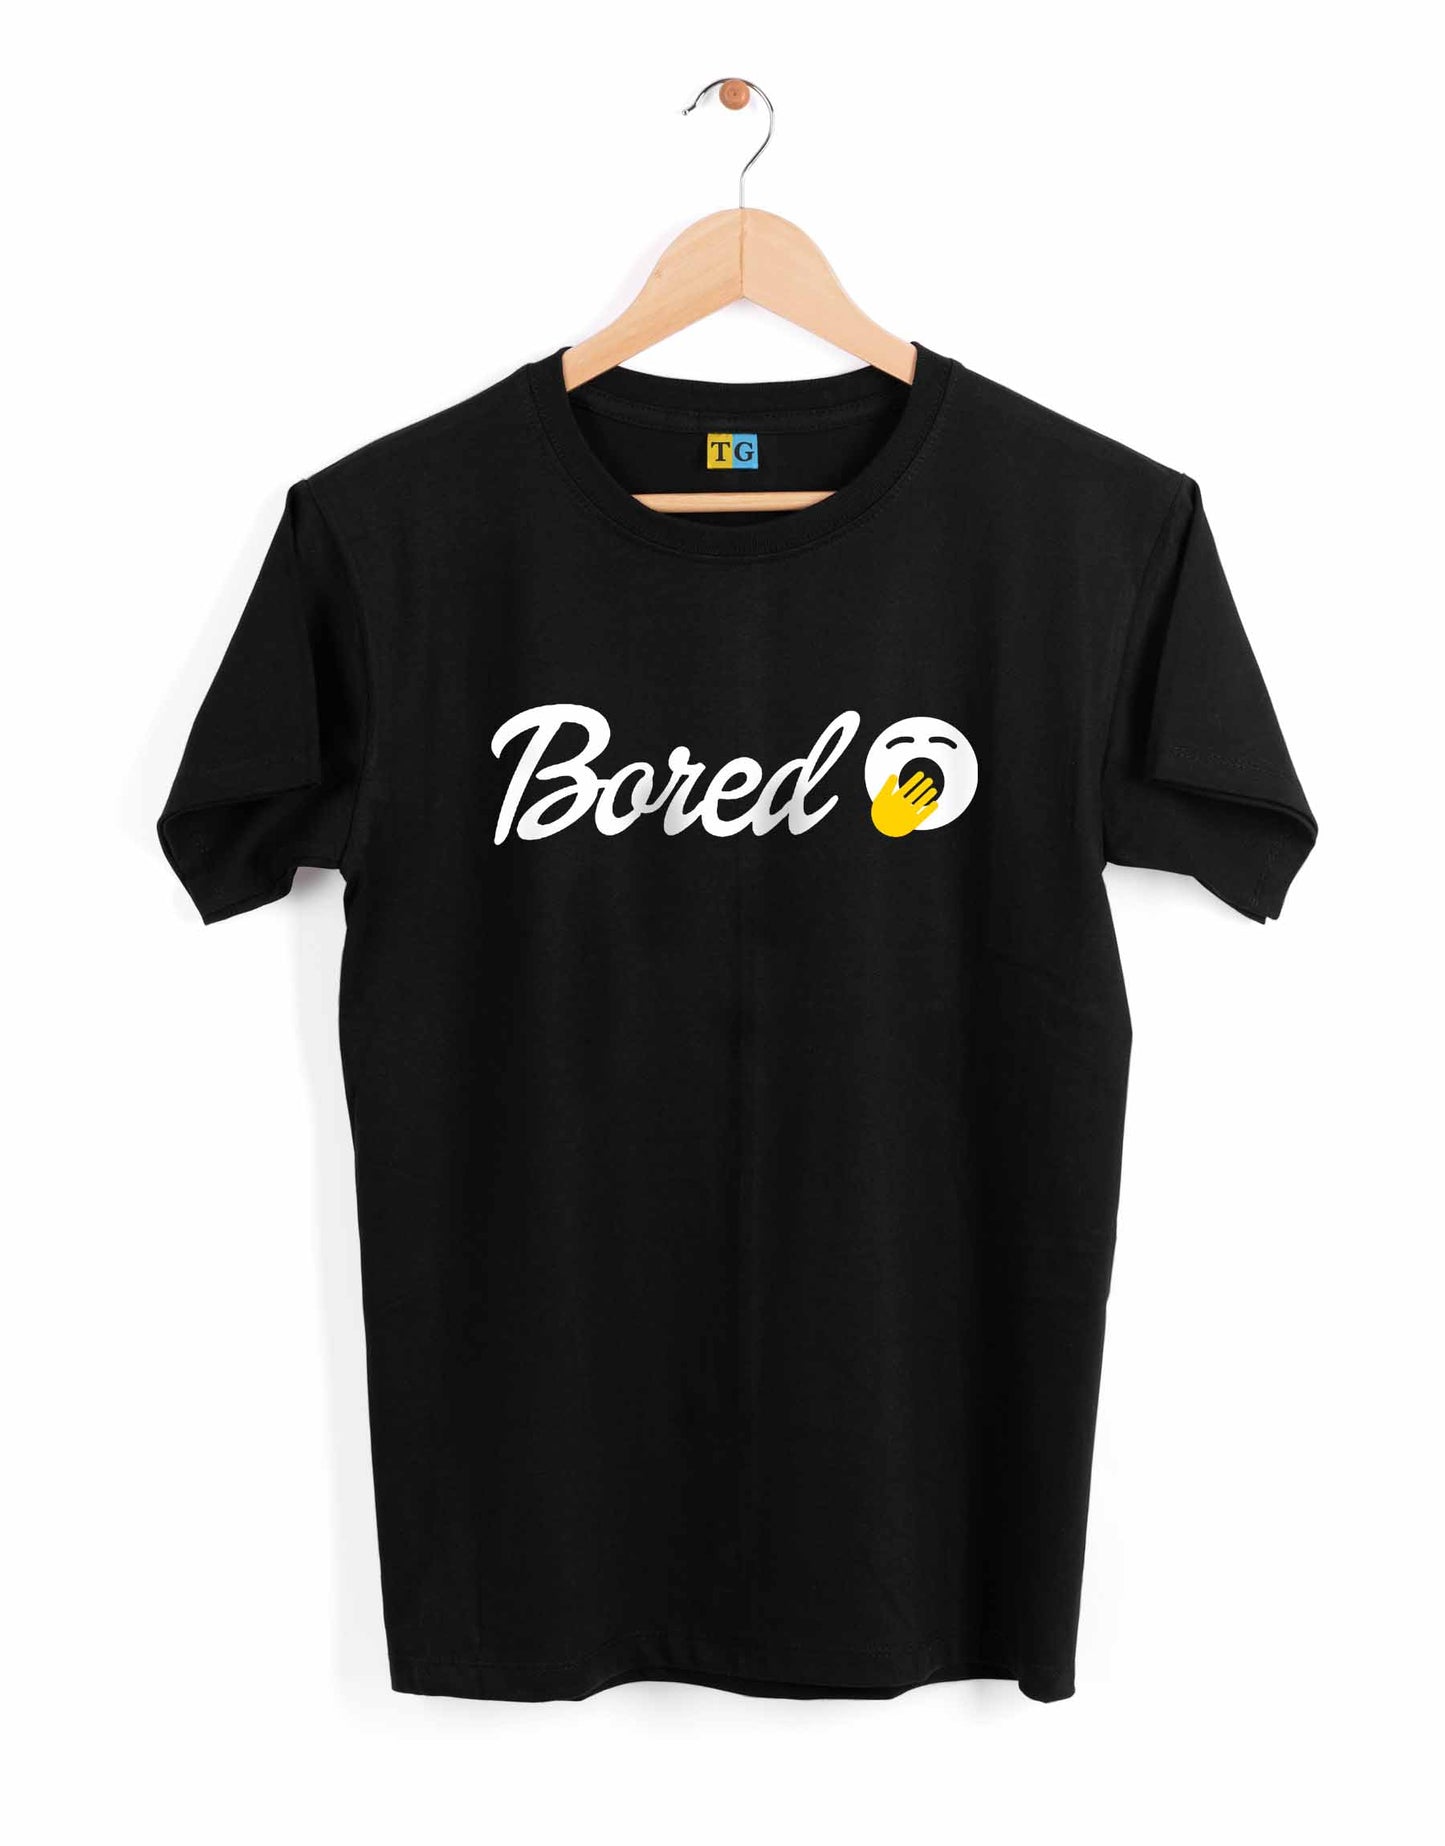 Bored Stylish Printed T-Shirt - 499.00 - TEEGURUJI - Free Shipping